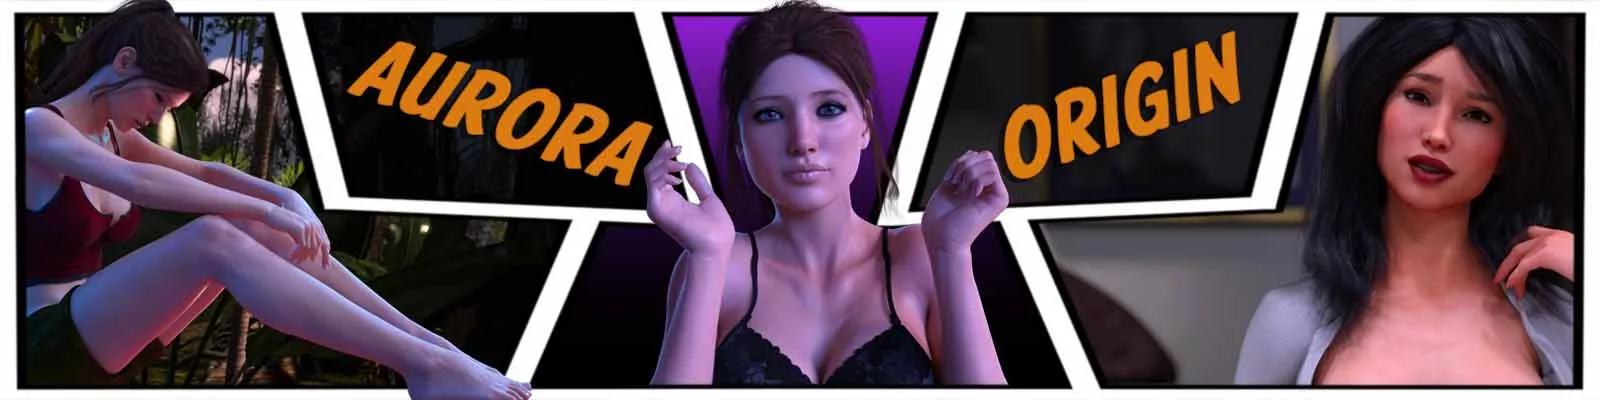 Aurora Origin 3d jeu sexuel, jeu xxx, jeu porno